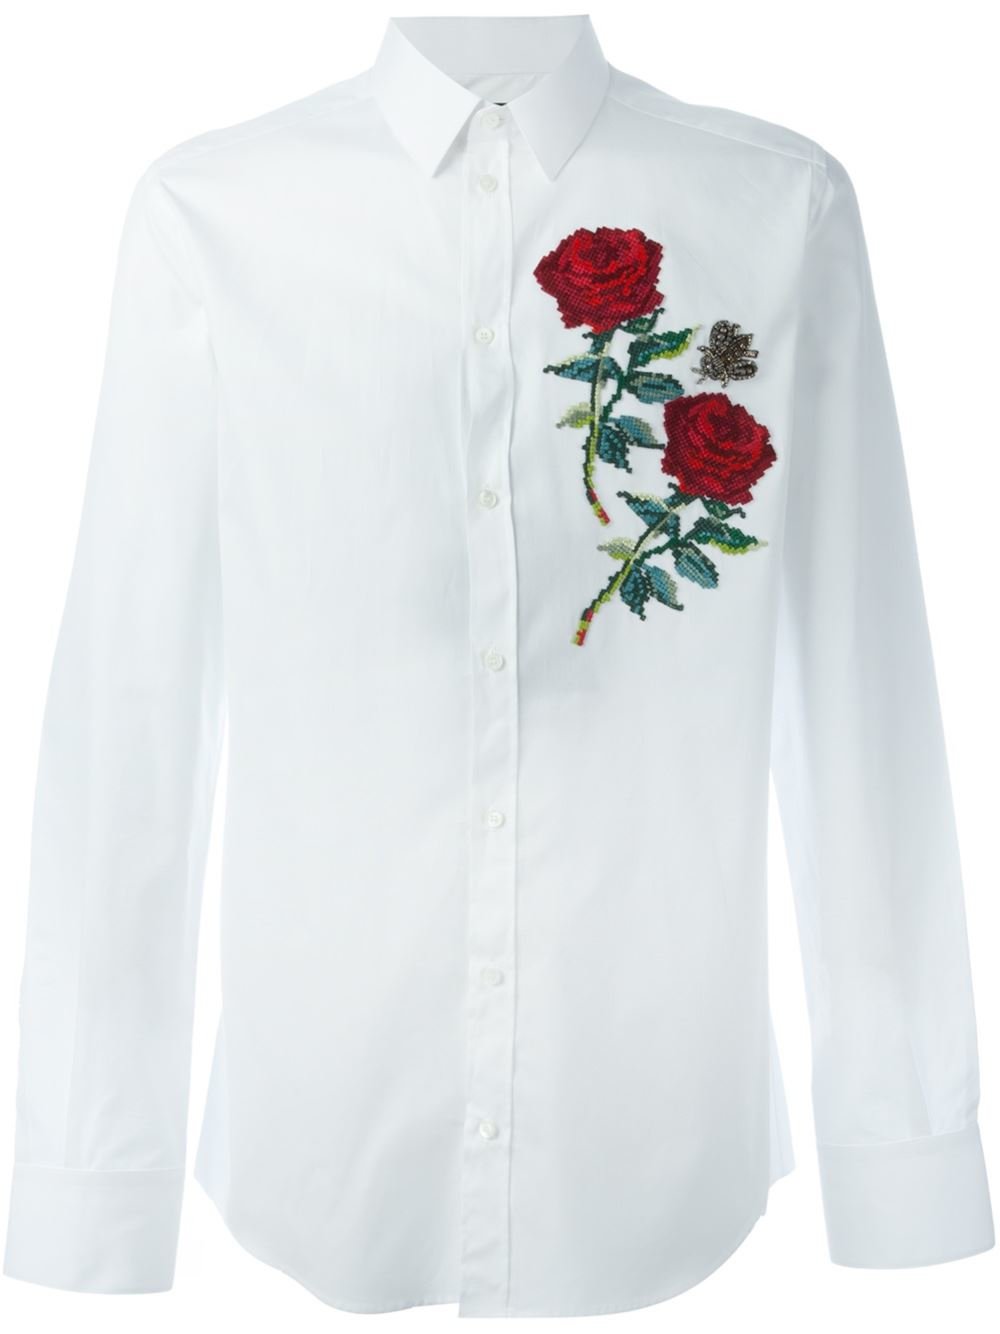 Dolce & Gabbana Cotton Rose Appliqué Shirt in White for Men - Lyst